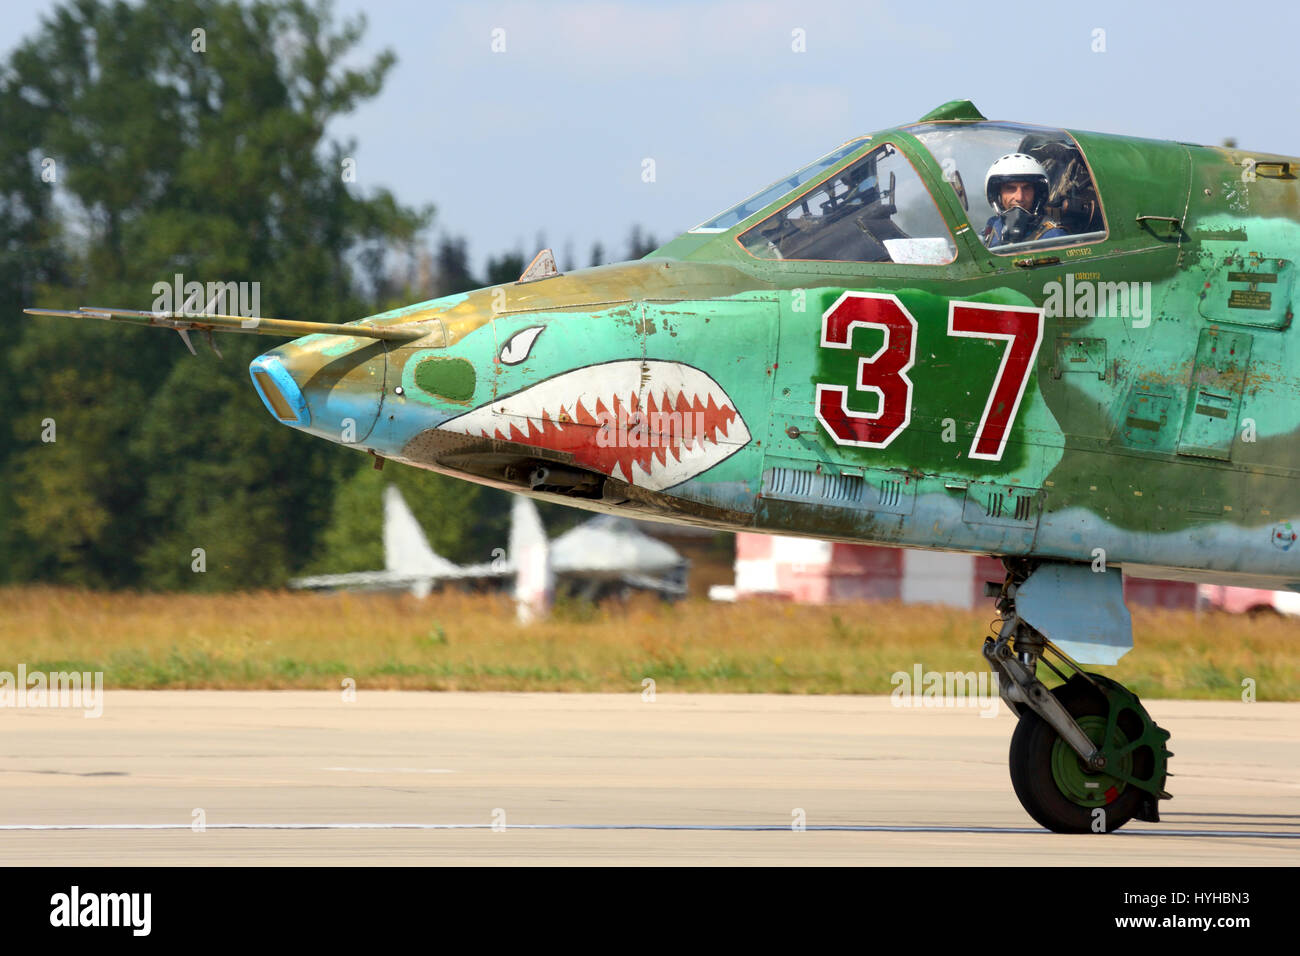 KUBINKA, MOSCOW REGION, RUSSIA - AUGUST 7, 2014: Su-25 37 RED taxiing at Kubinka air force base. Stock Photo